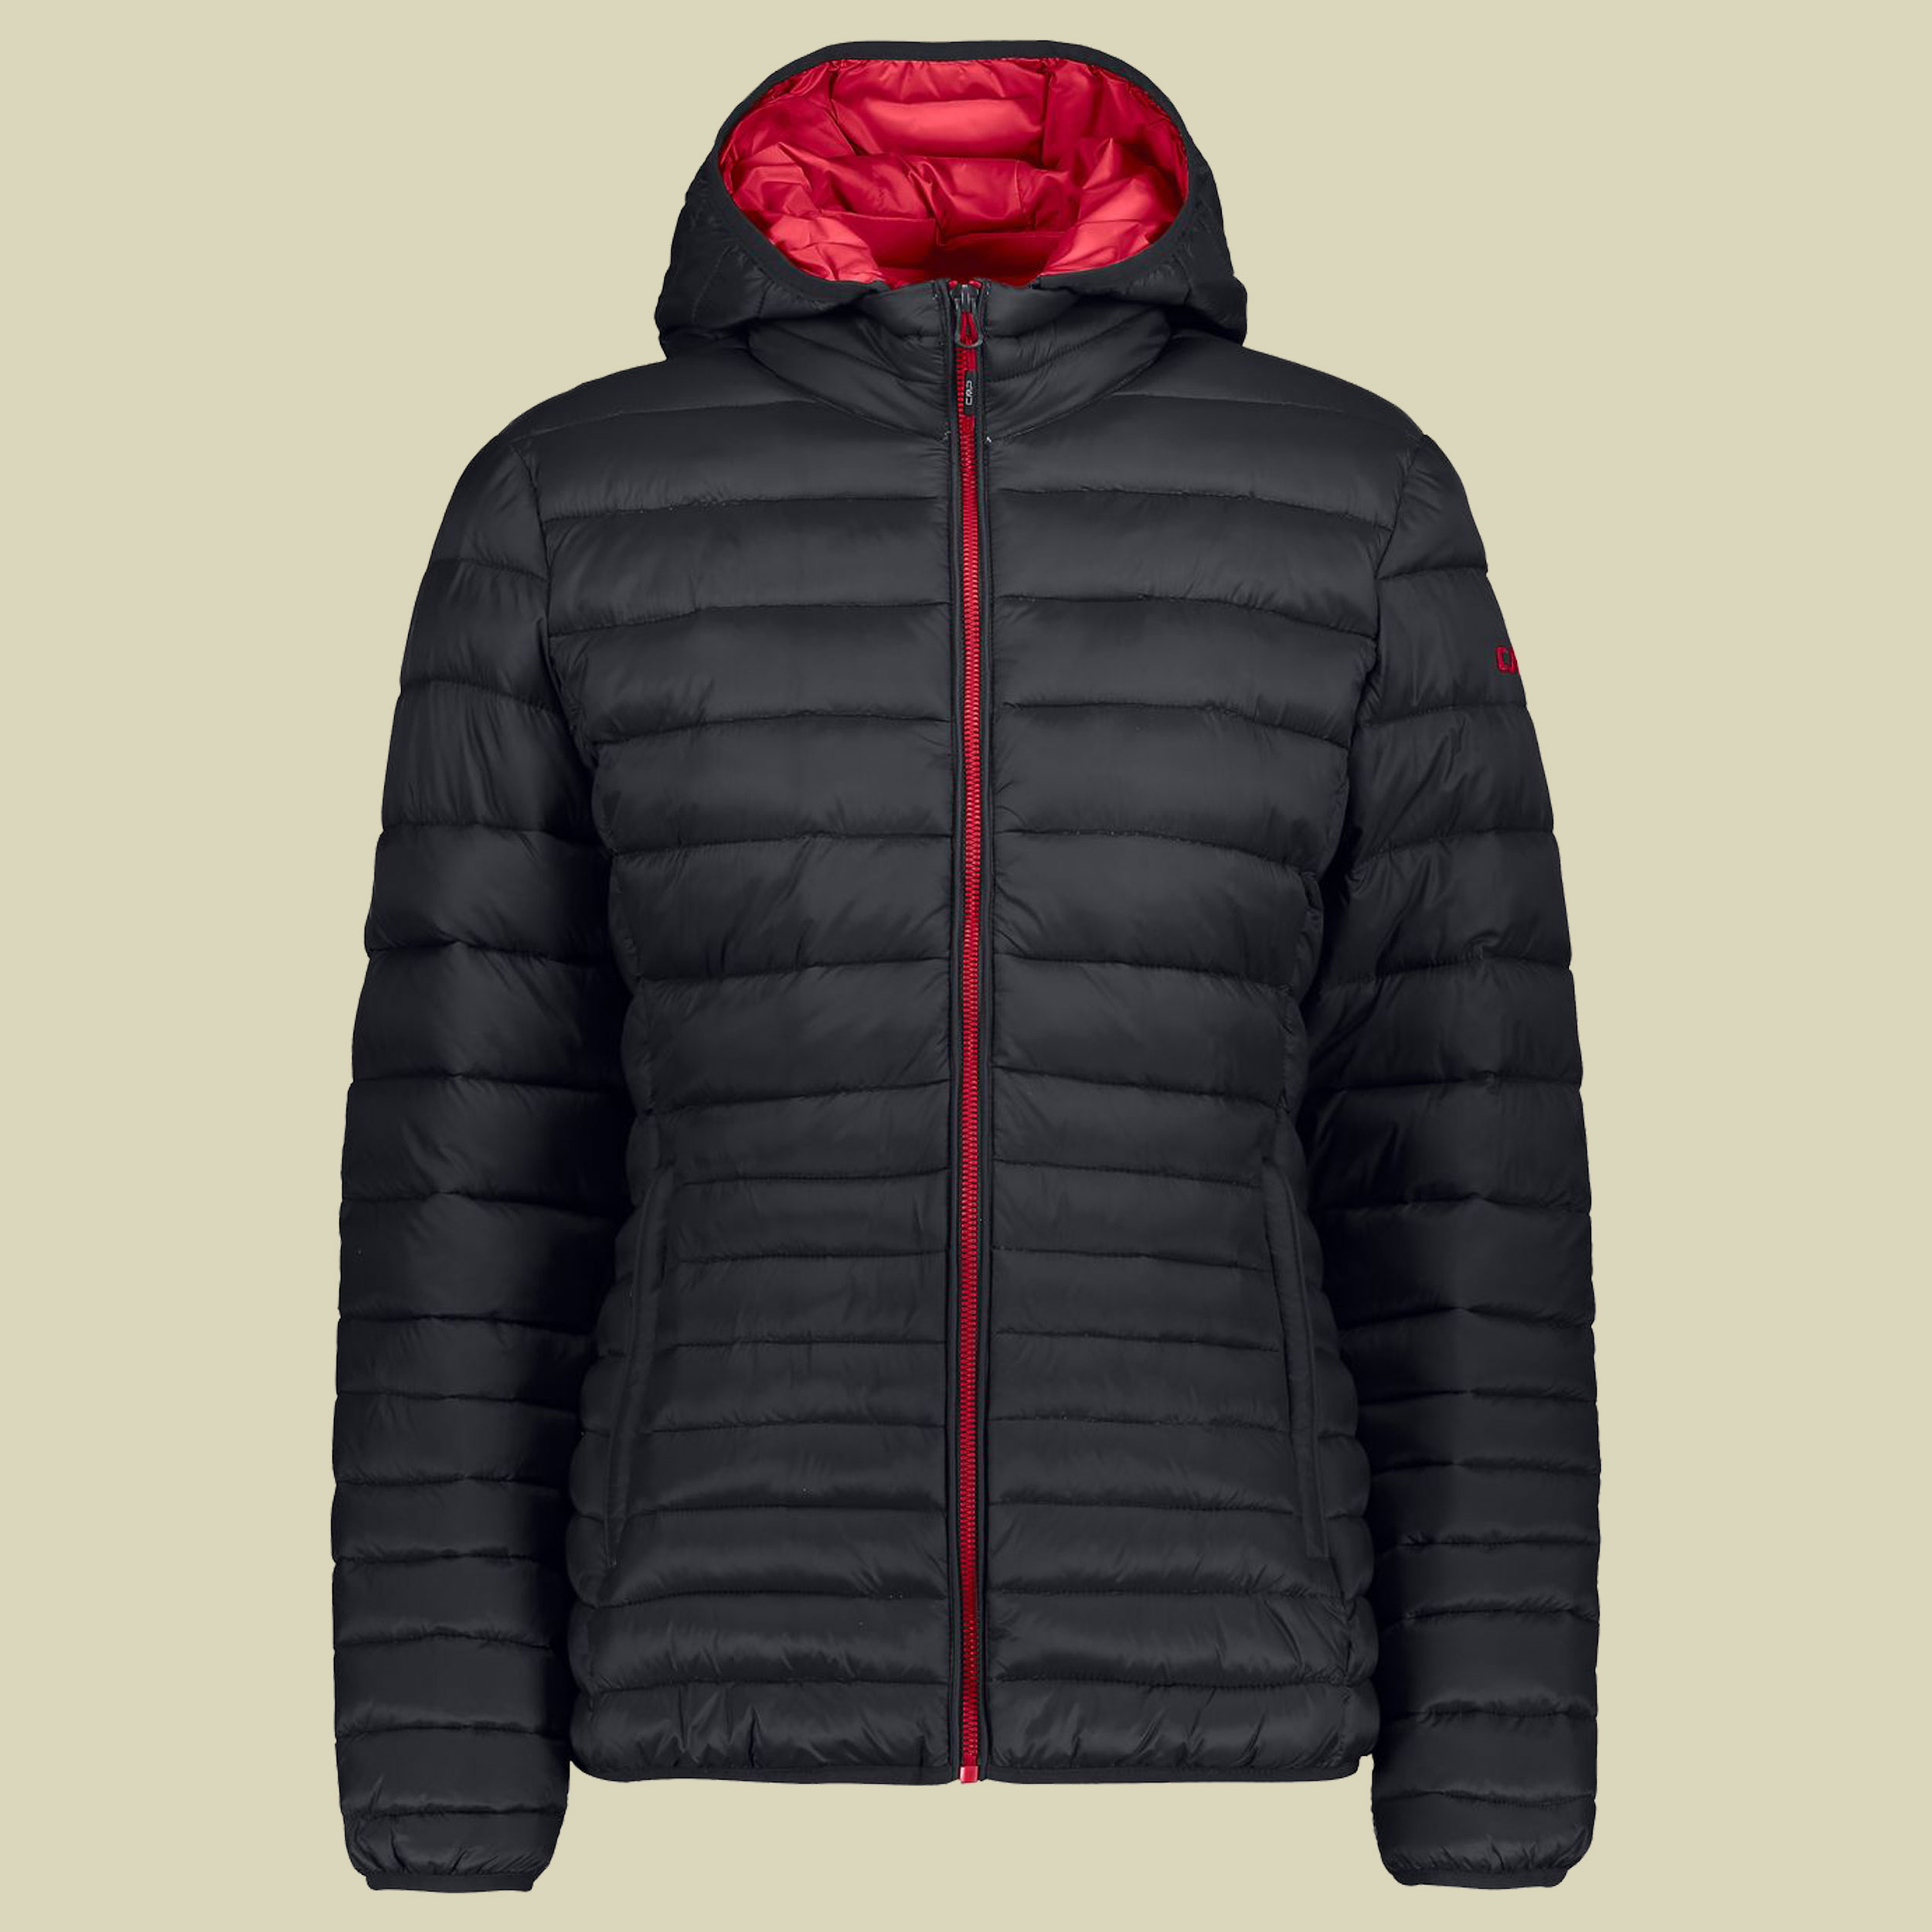 Woman Jacket Zip Hood 3Z18876 Größe 36 Farbe antracite-rhodamine 01UD